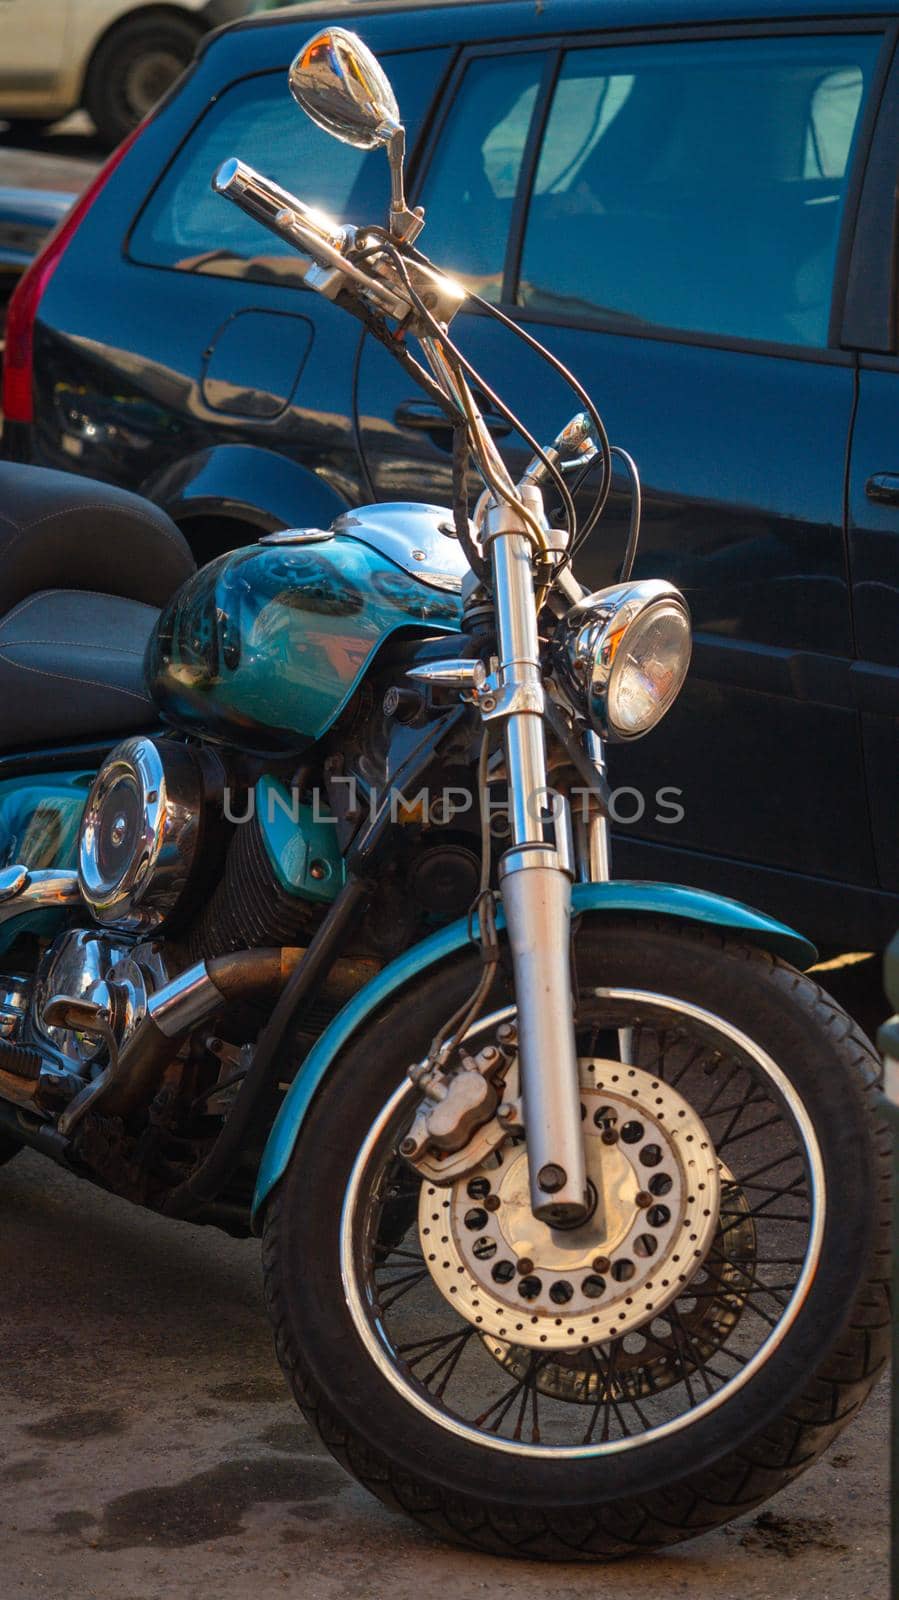 metallic blue motorbike, Parked in town